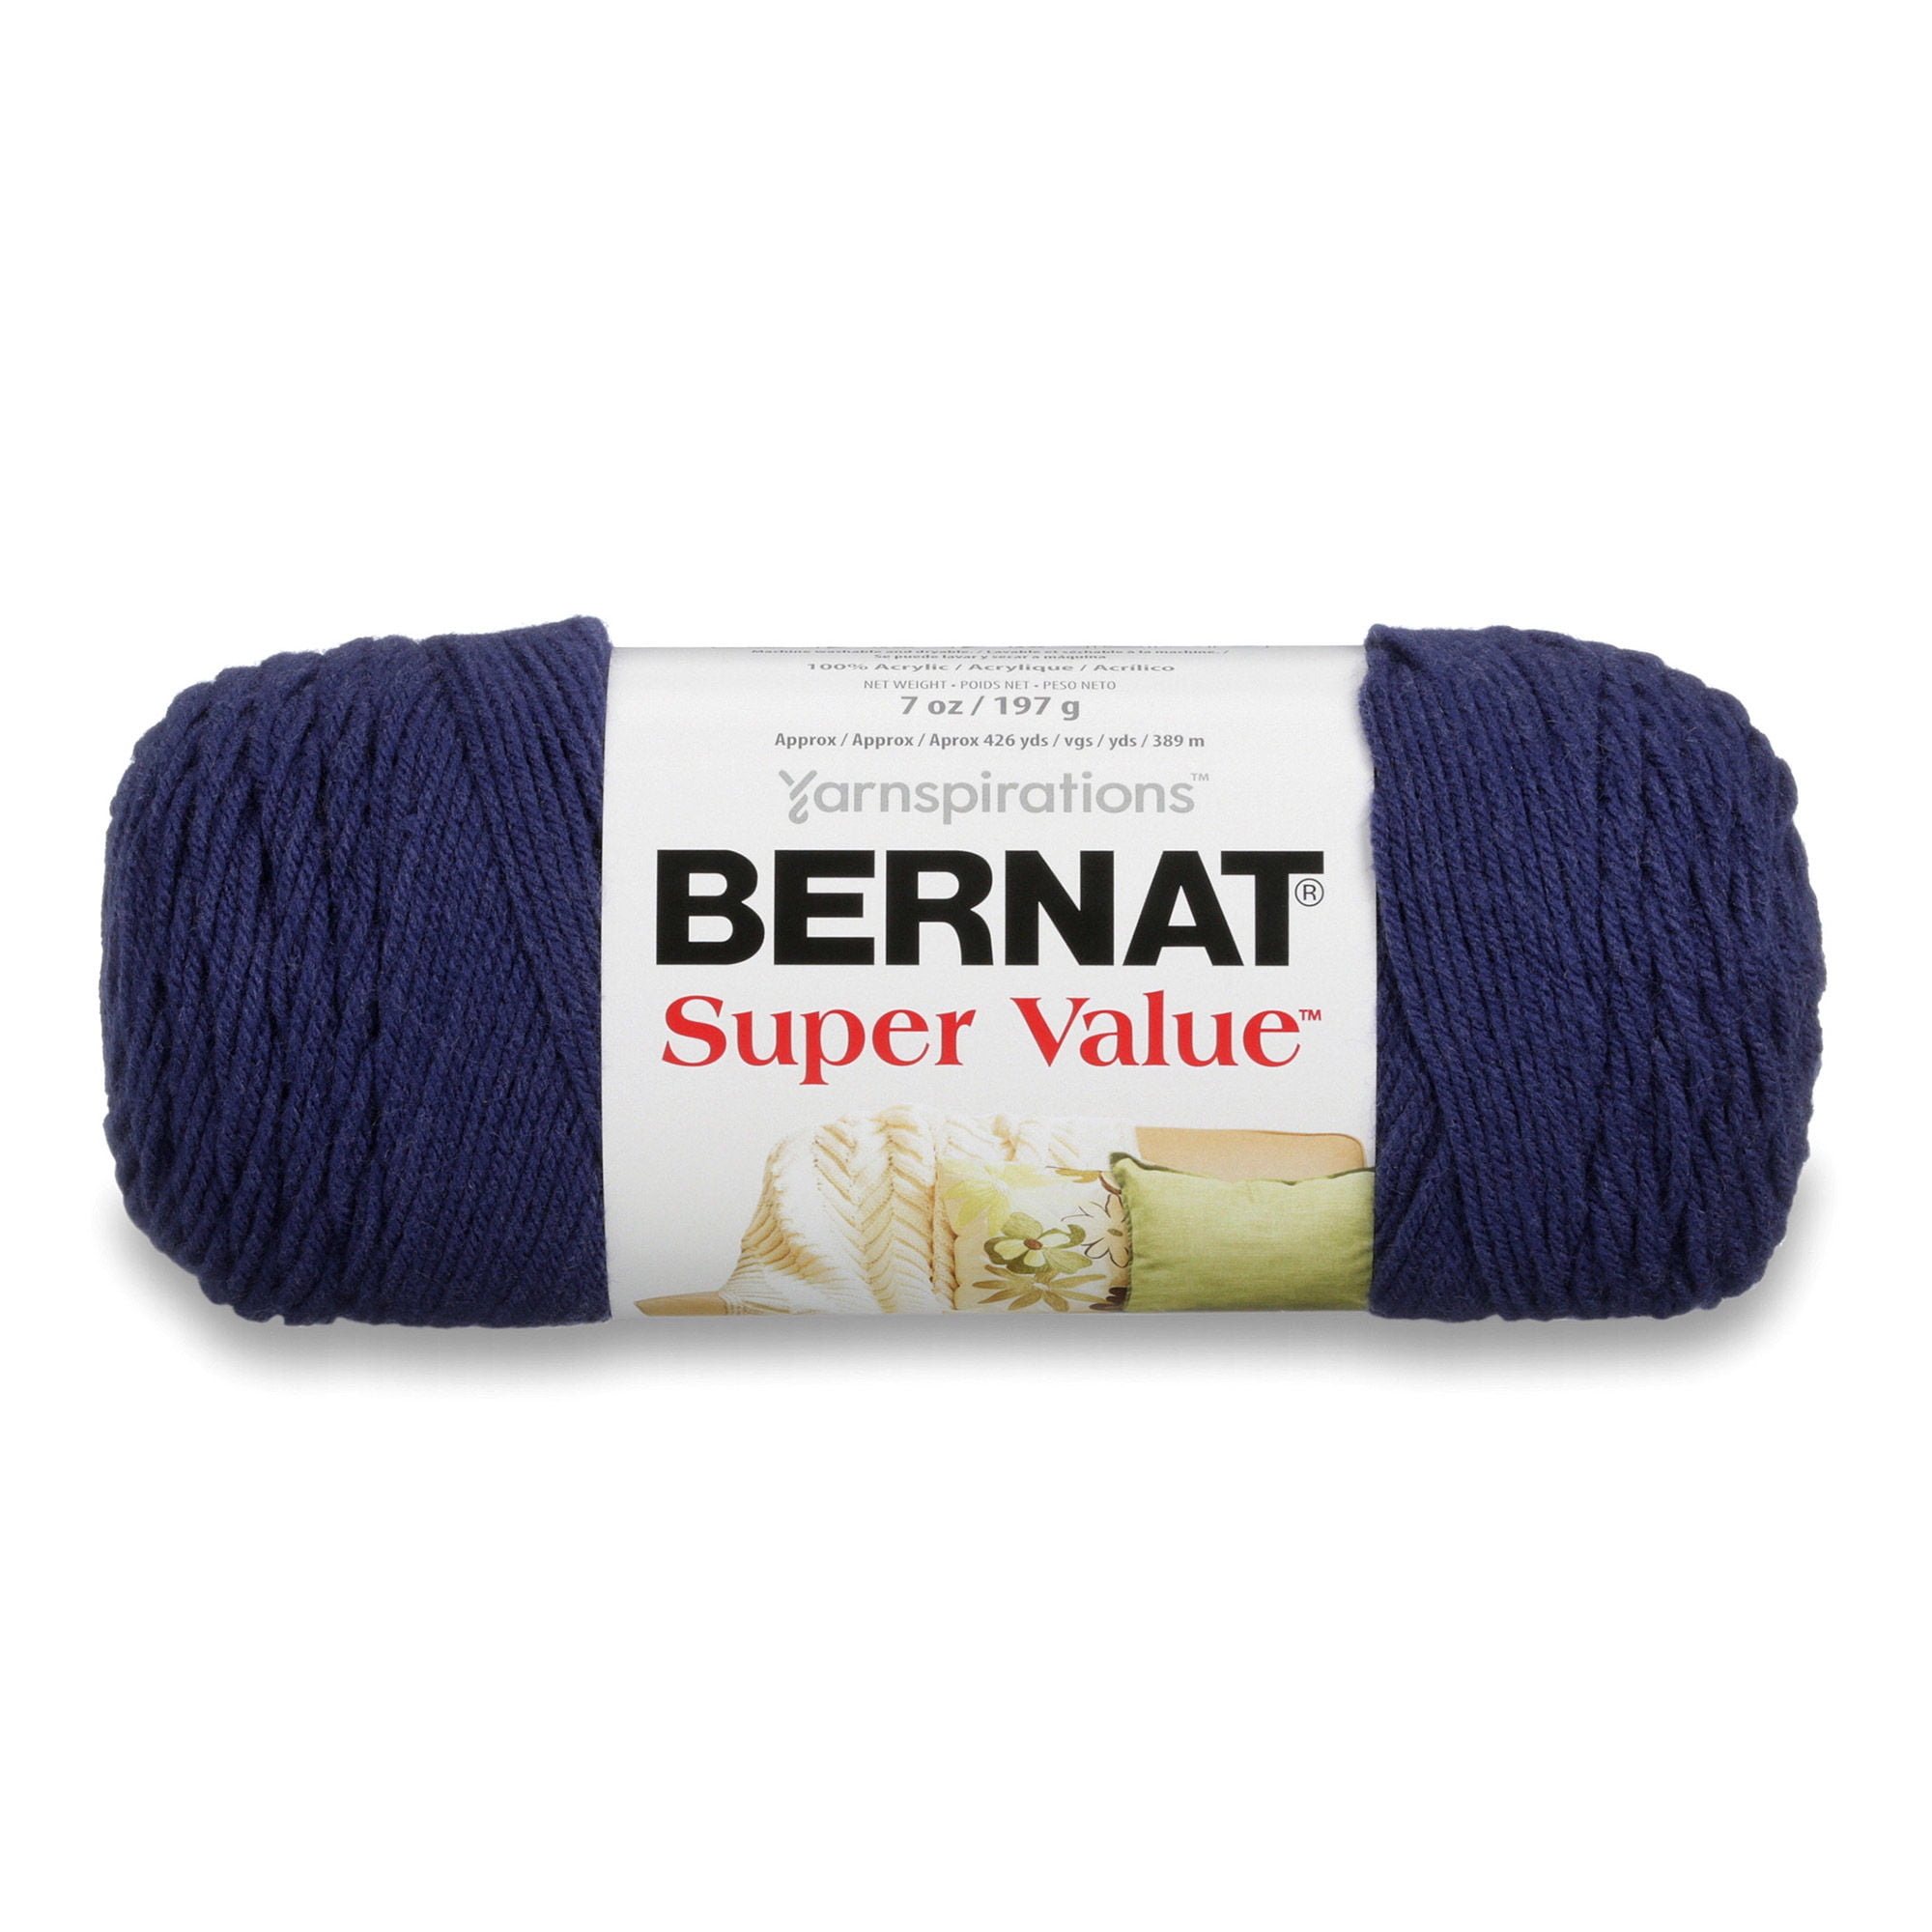 Bernat Super Value Stripes Yarn-Beachwood, 1 count - Dillons Food Stores